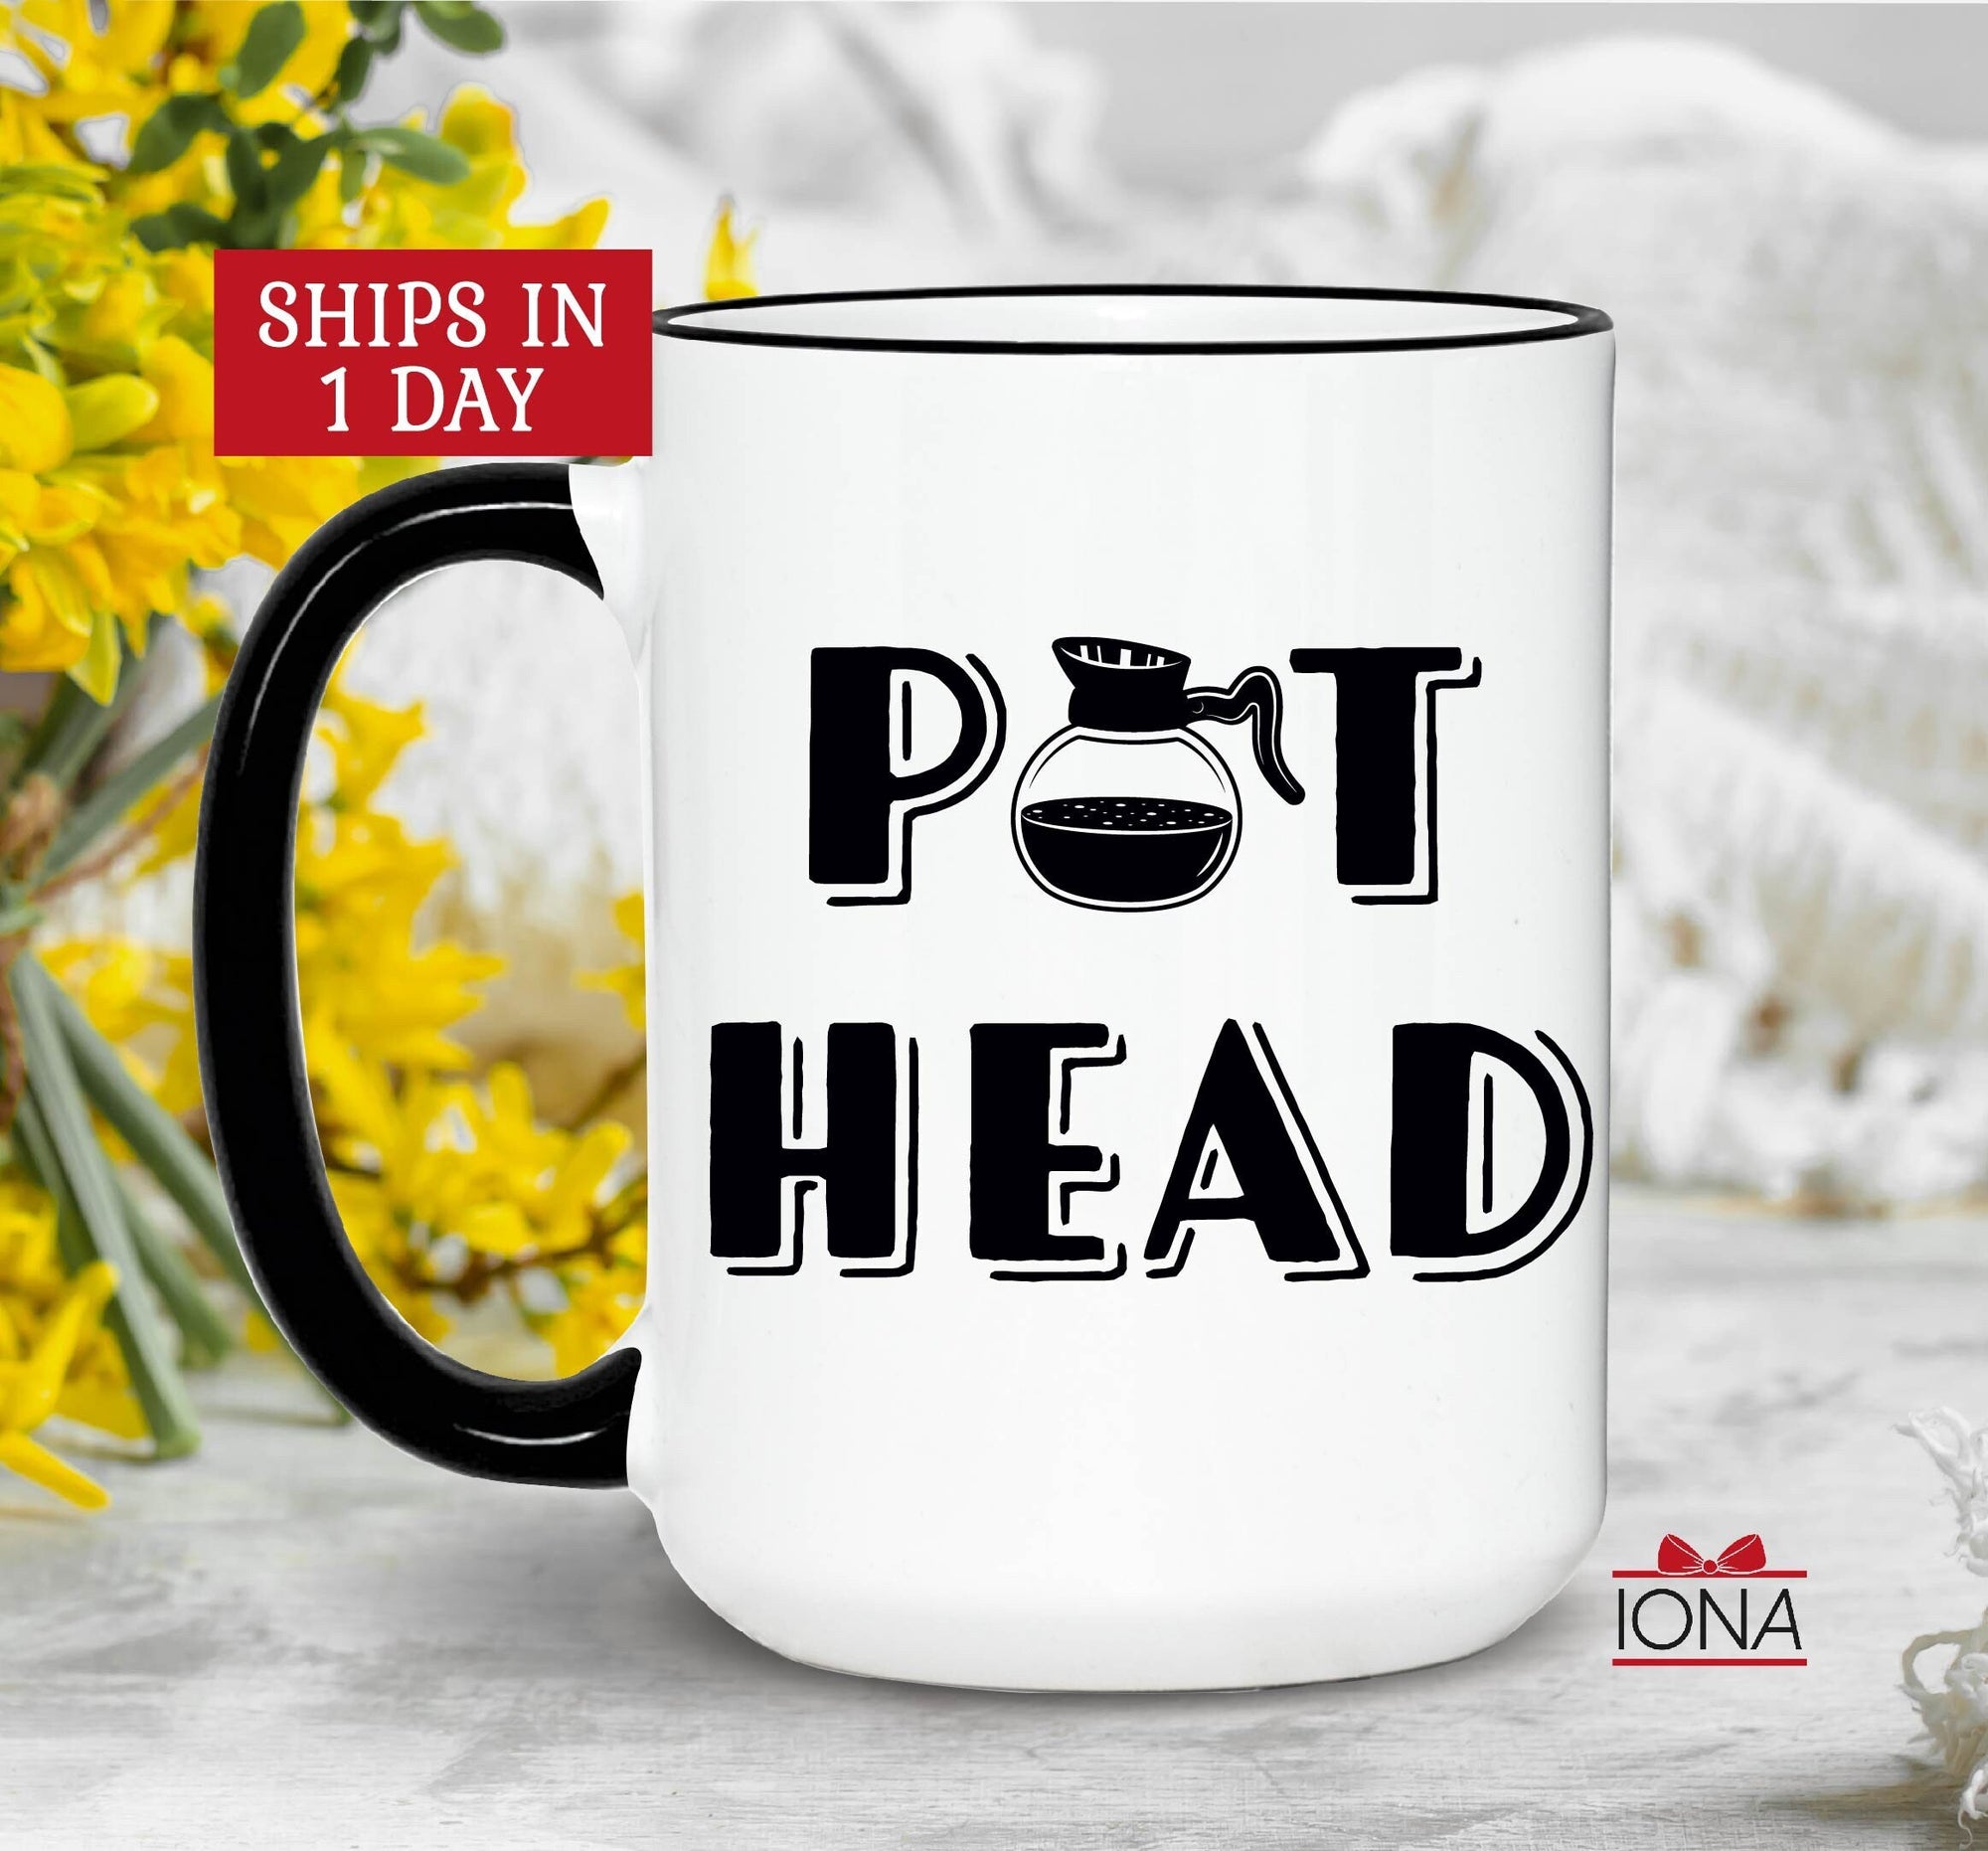 Pot head coffee mug, Morning Pot head Tea cup, Humor coffee lover gift ideas, Adult Christmas present, Funny Coffee Saying, Birthday Gifts